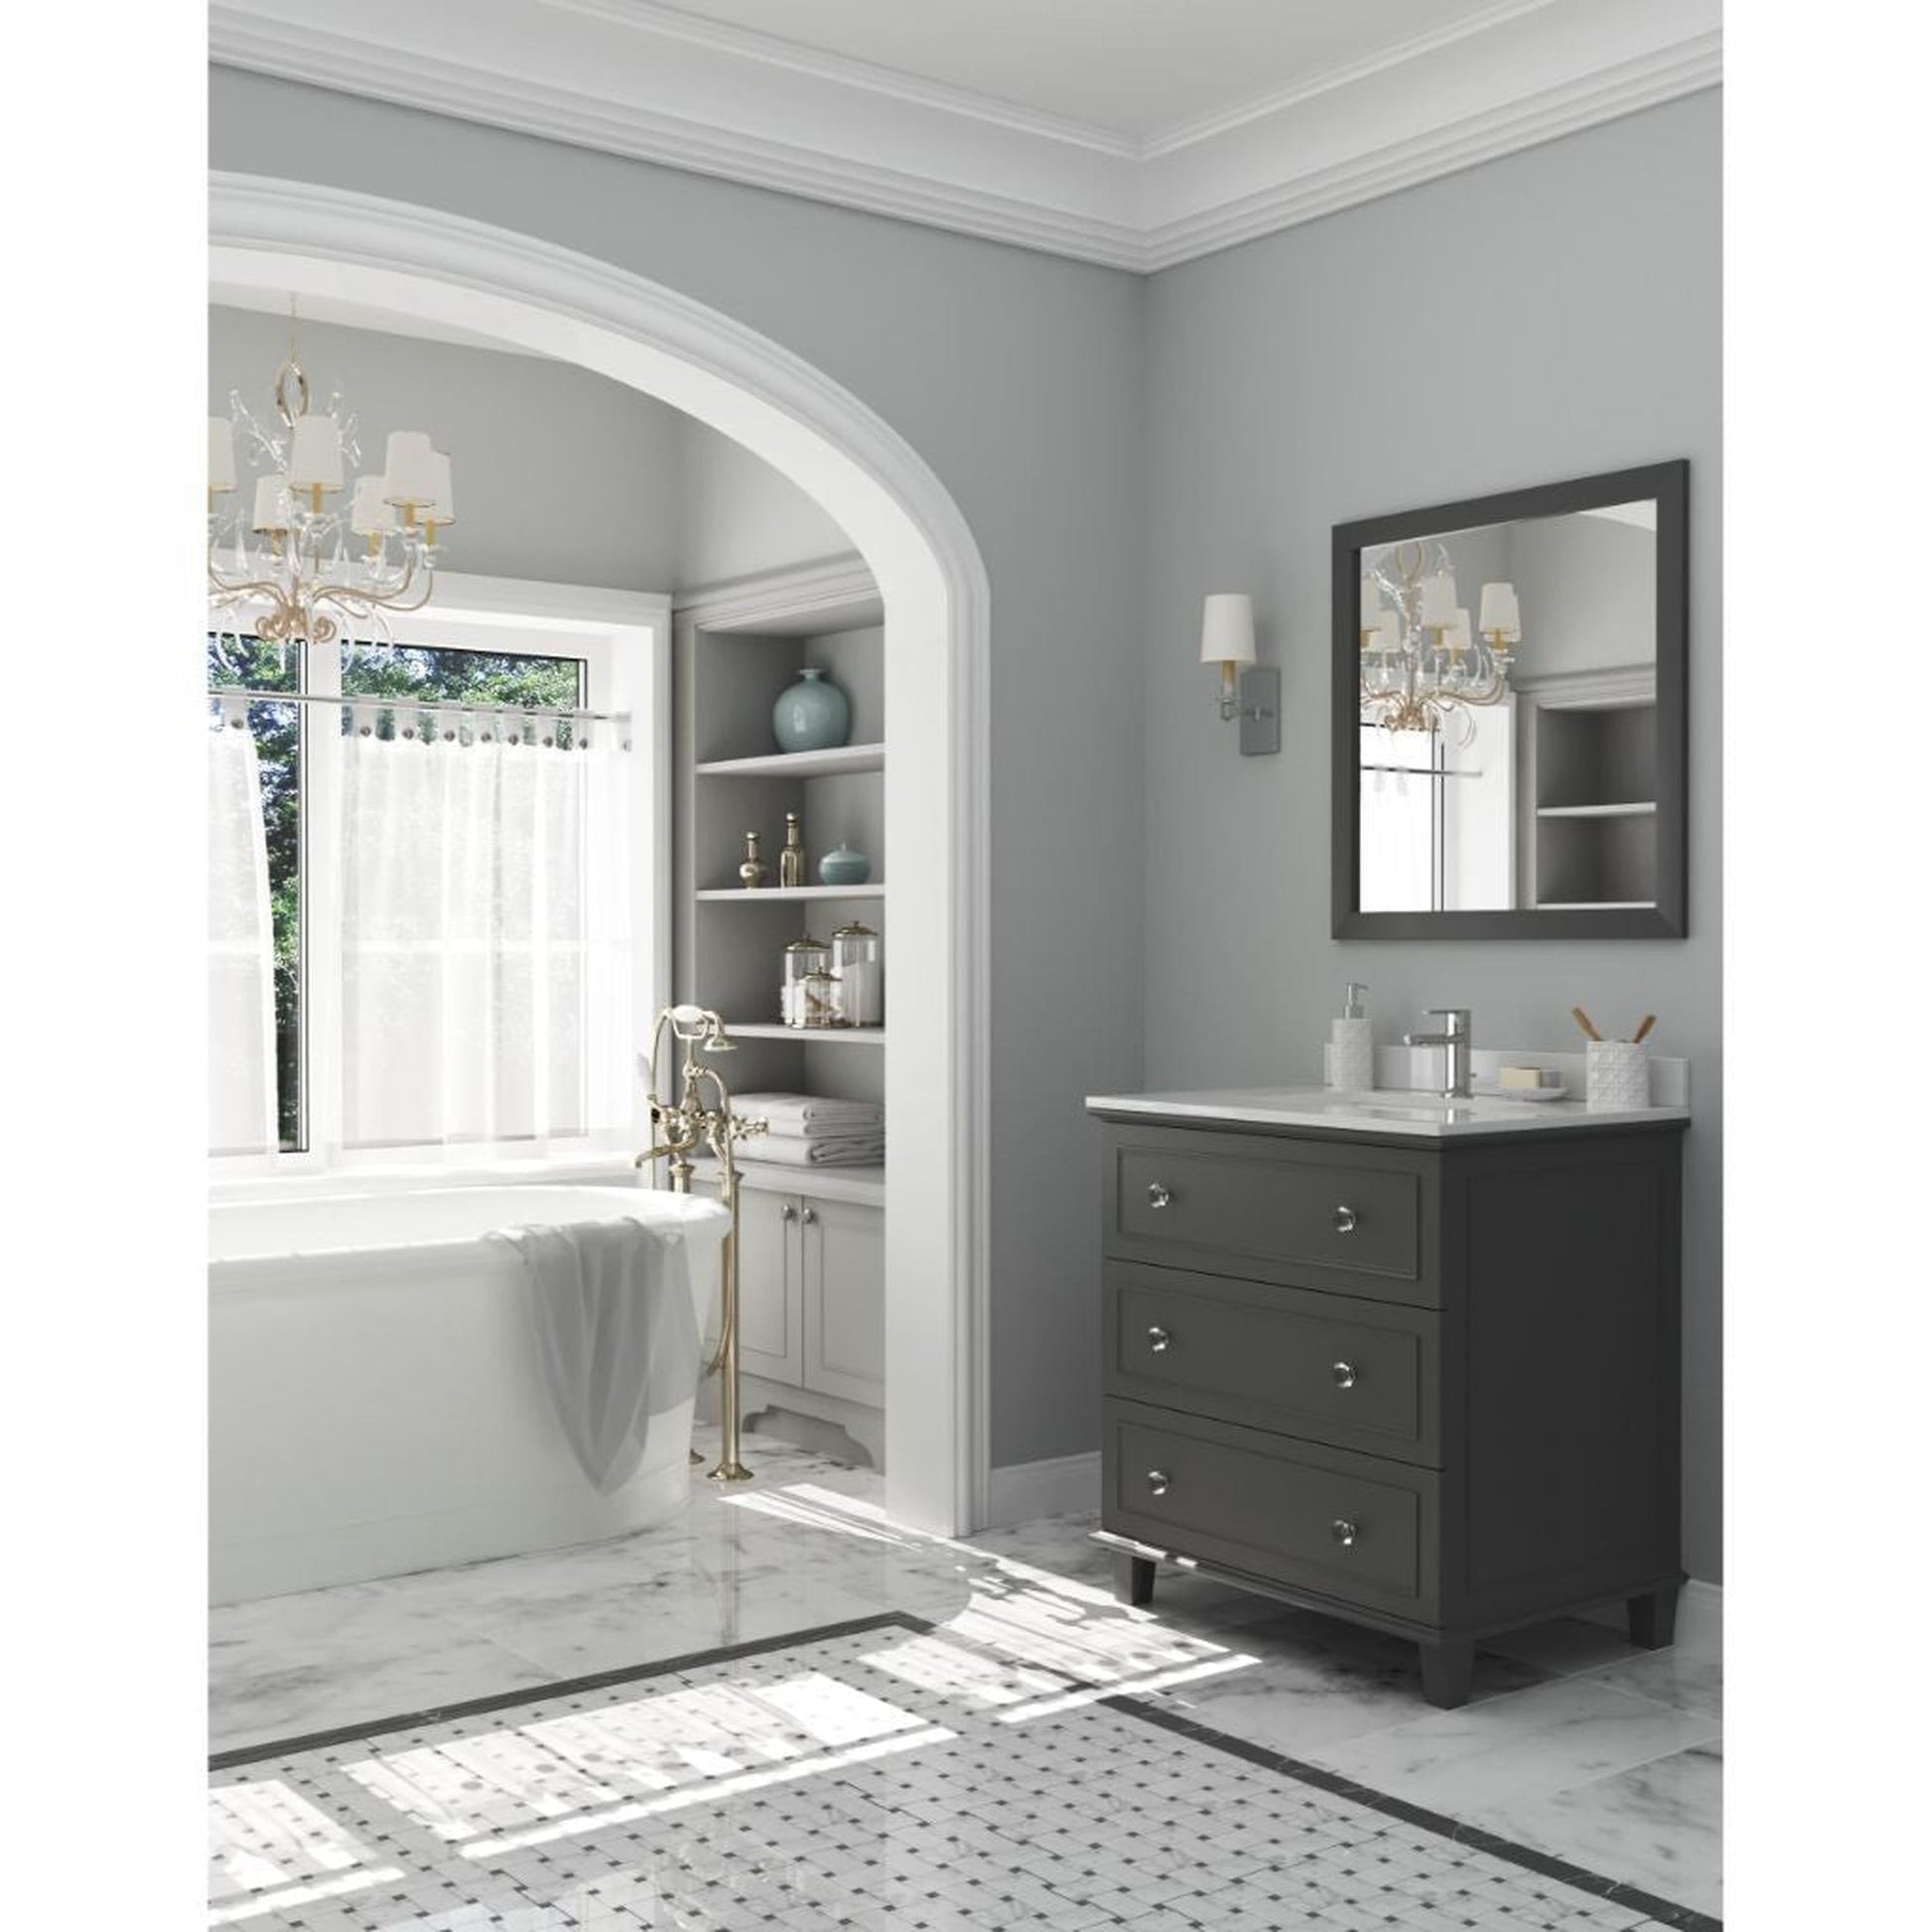 Laviva Luna 30" Maple Gray Vanity Base and White Quartz Countertop with Rectangular Ceramic Sink